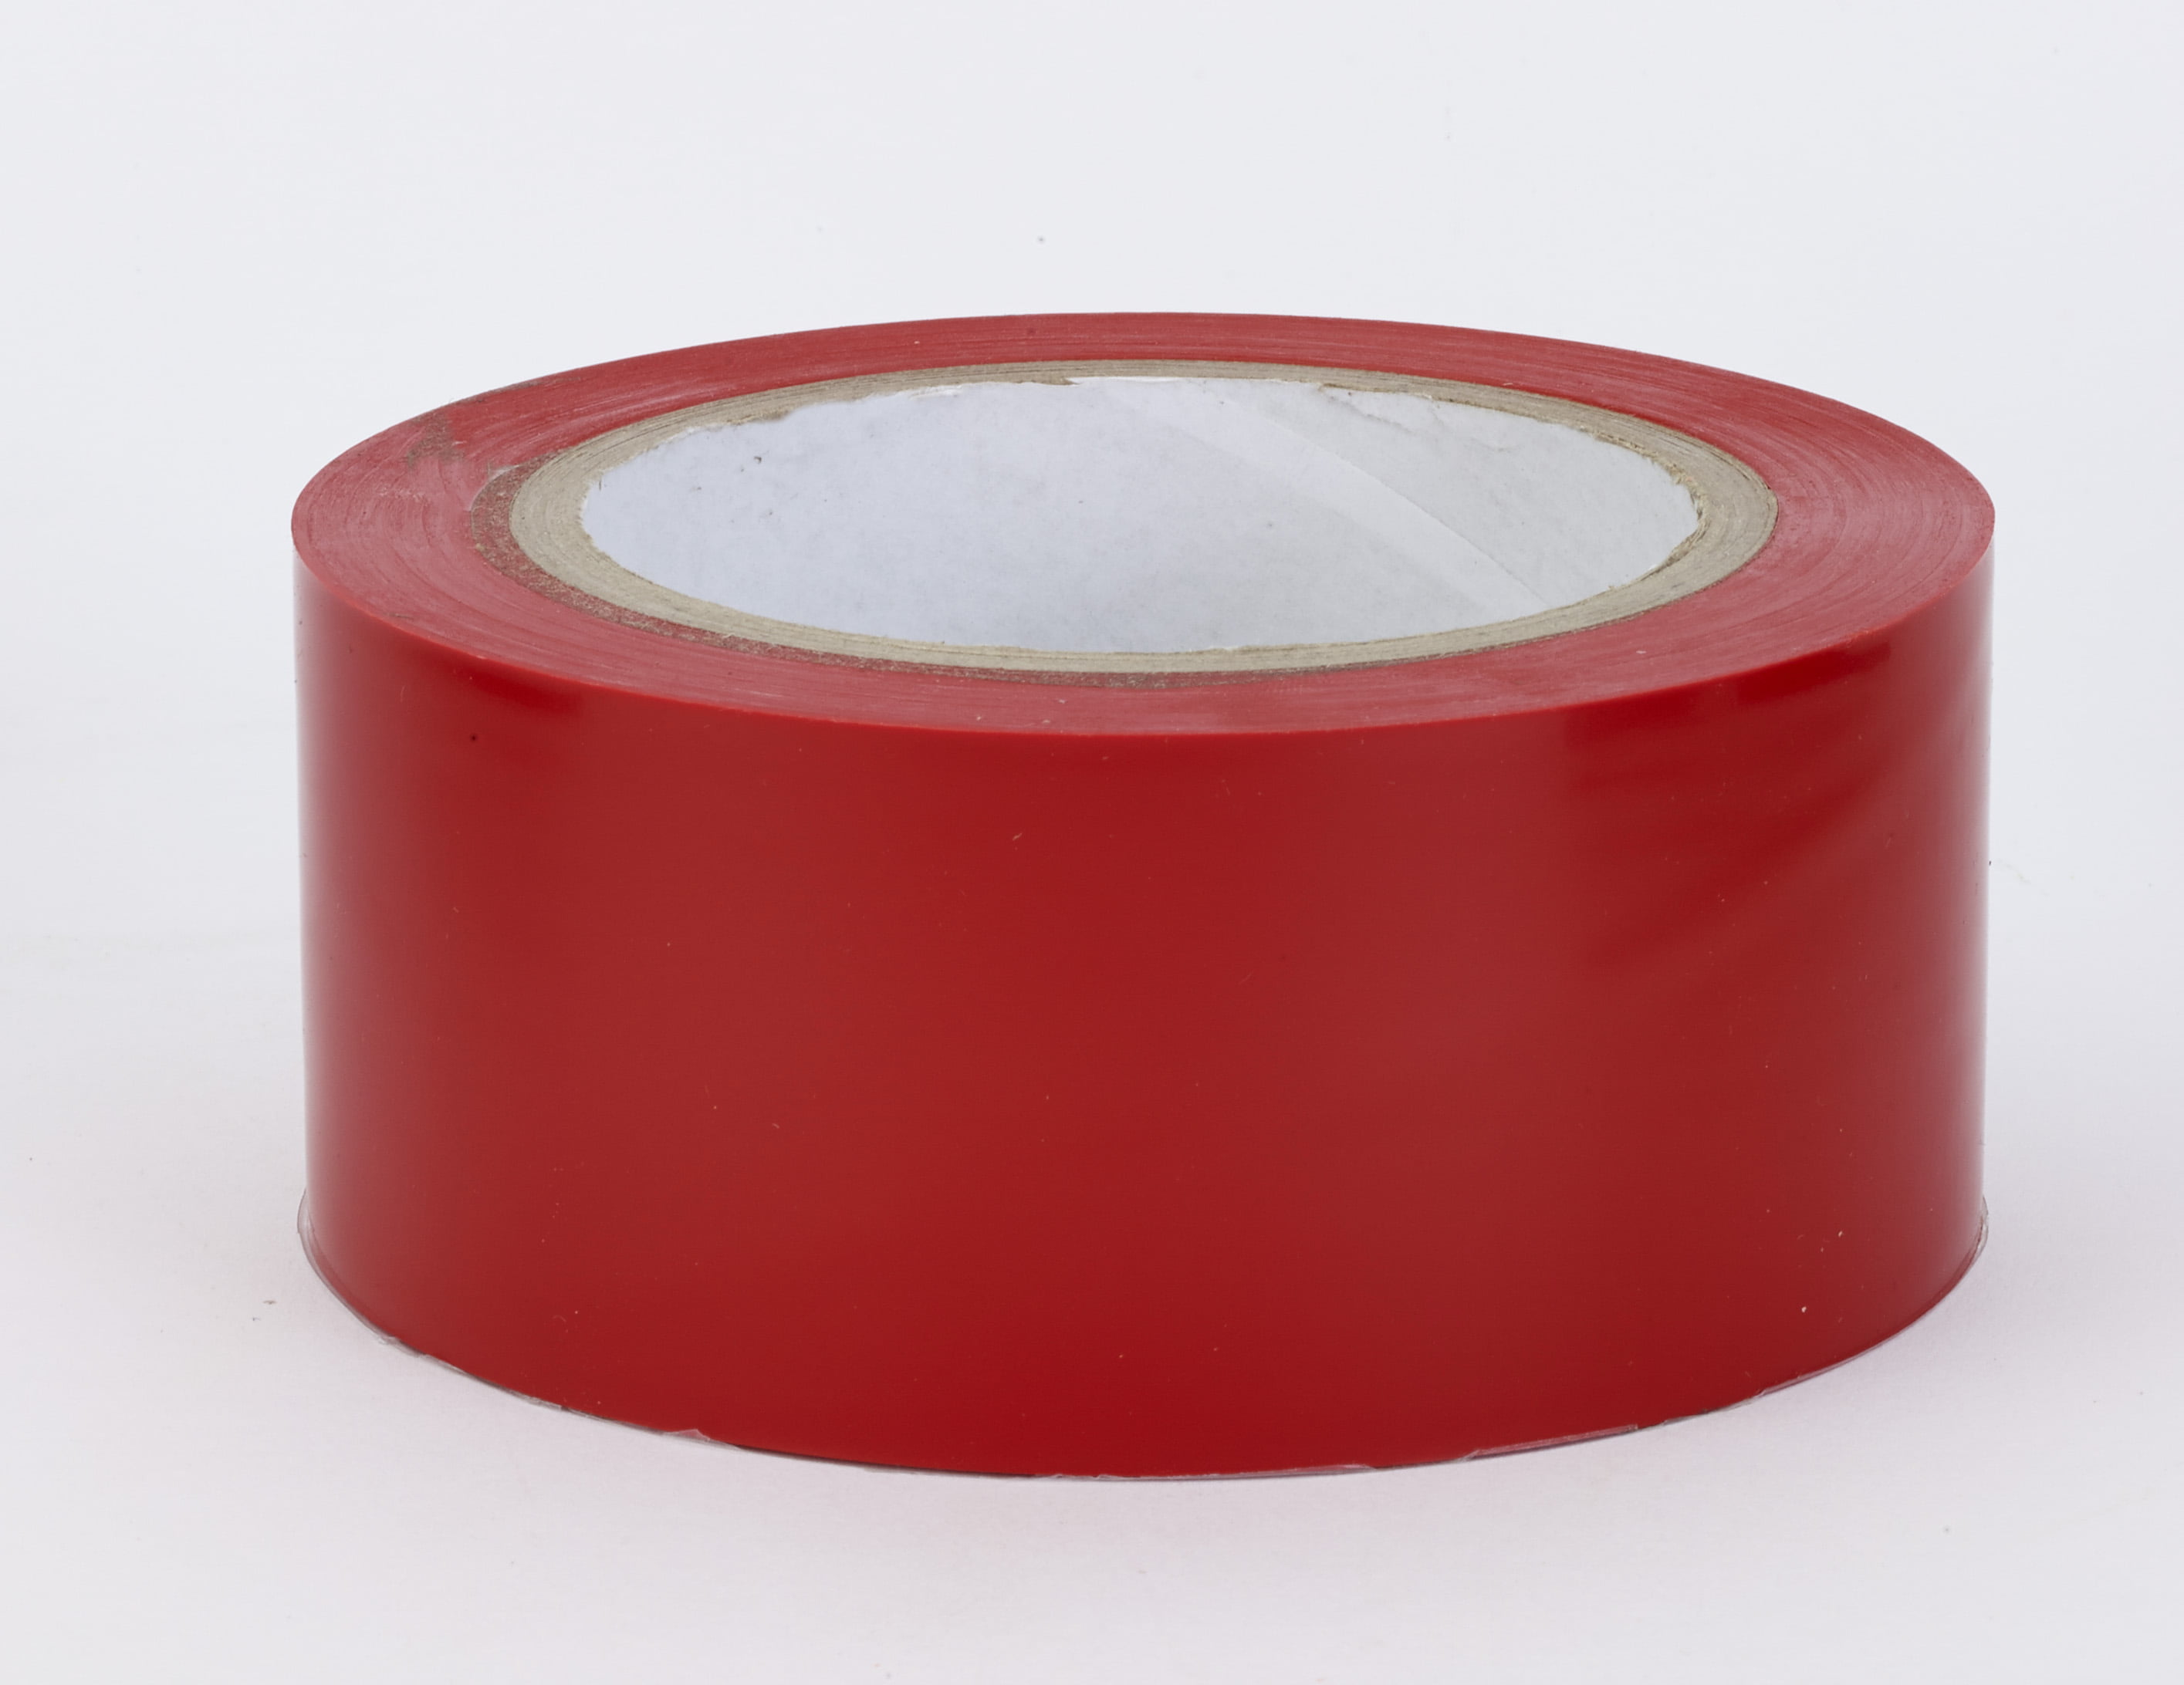 PVC Vinyl Aisle Marking Tape, 6 mil, 2" x 36 yd., Red (Pack of 24)